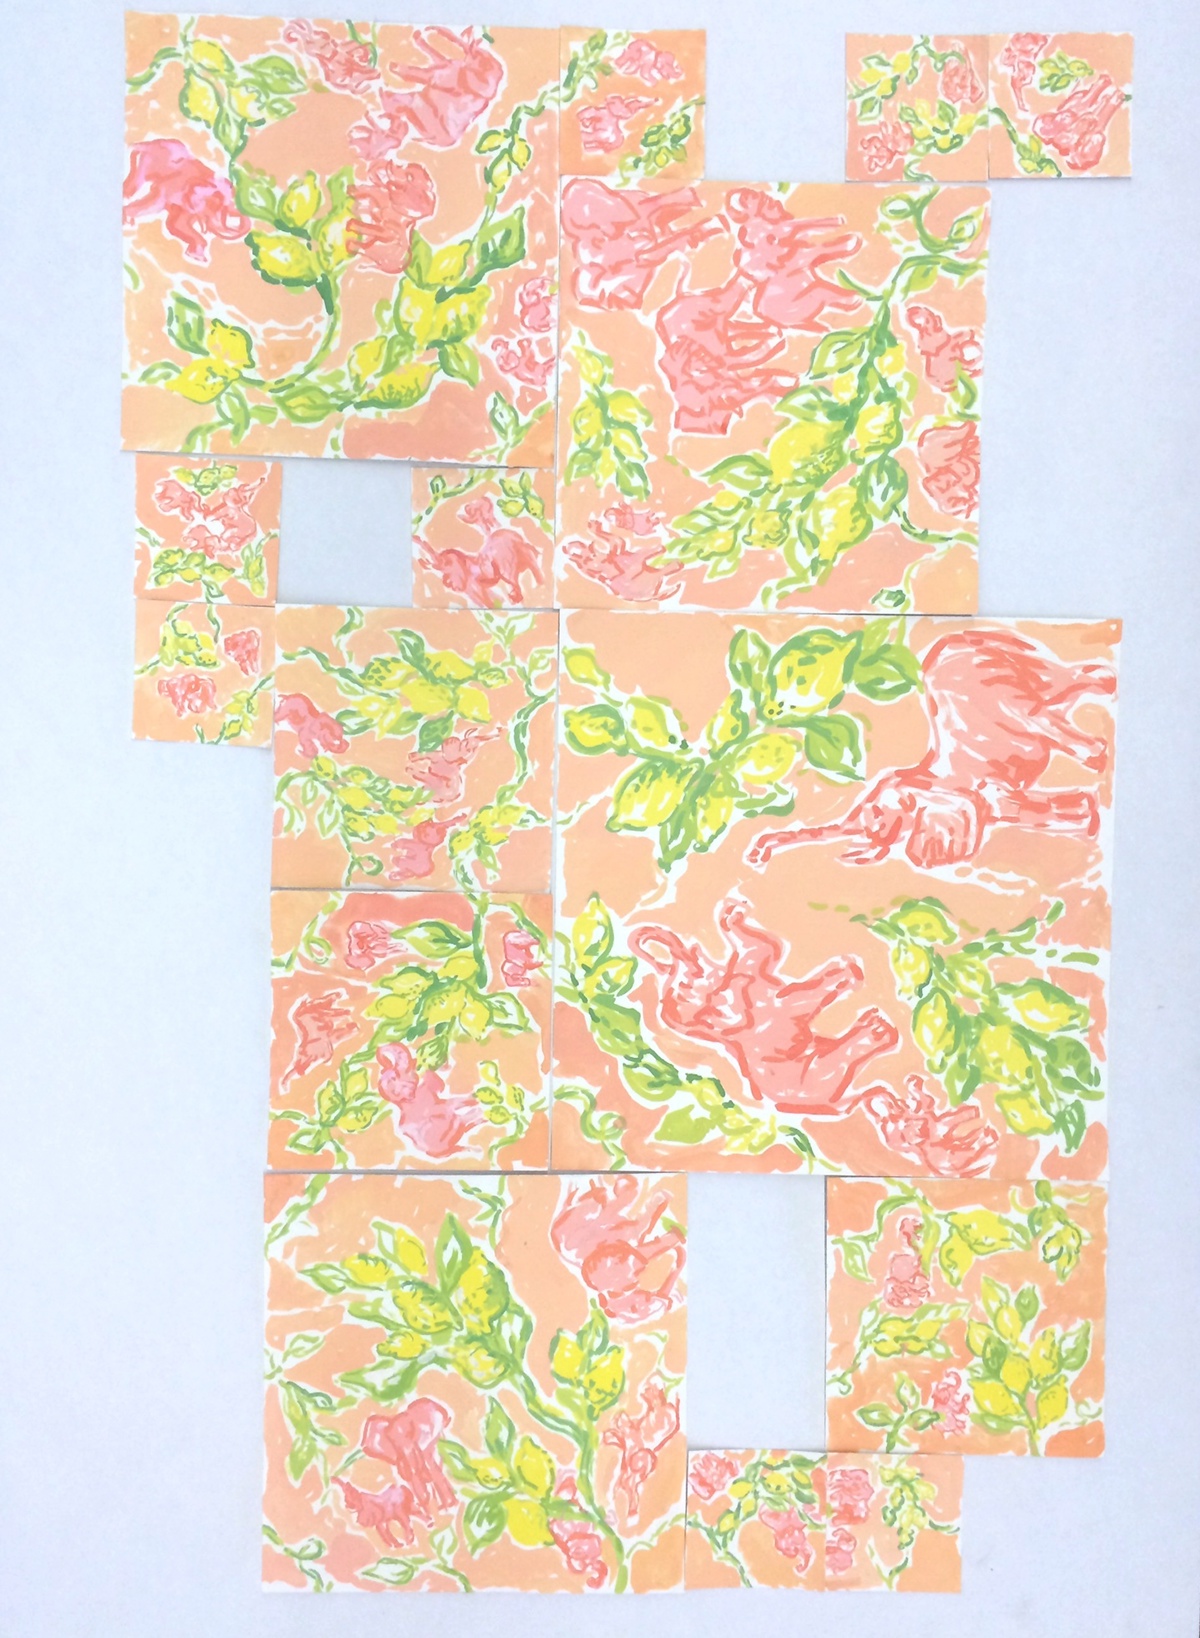 gouache Bristol process work Lilly Pulitzer preppy apparel textile print pattern Tropical